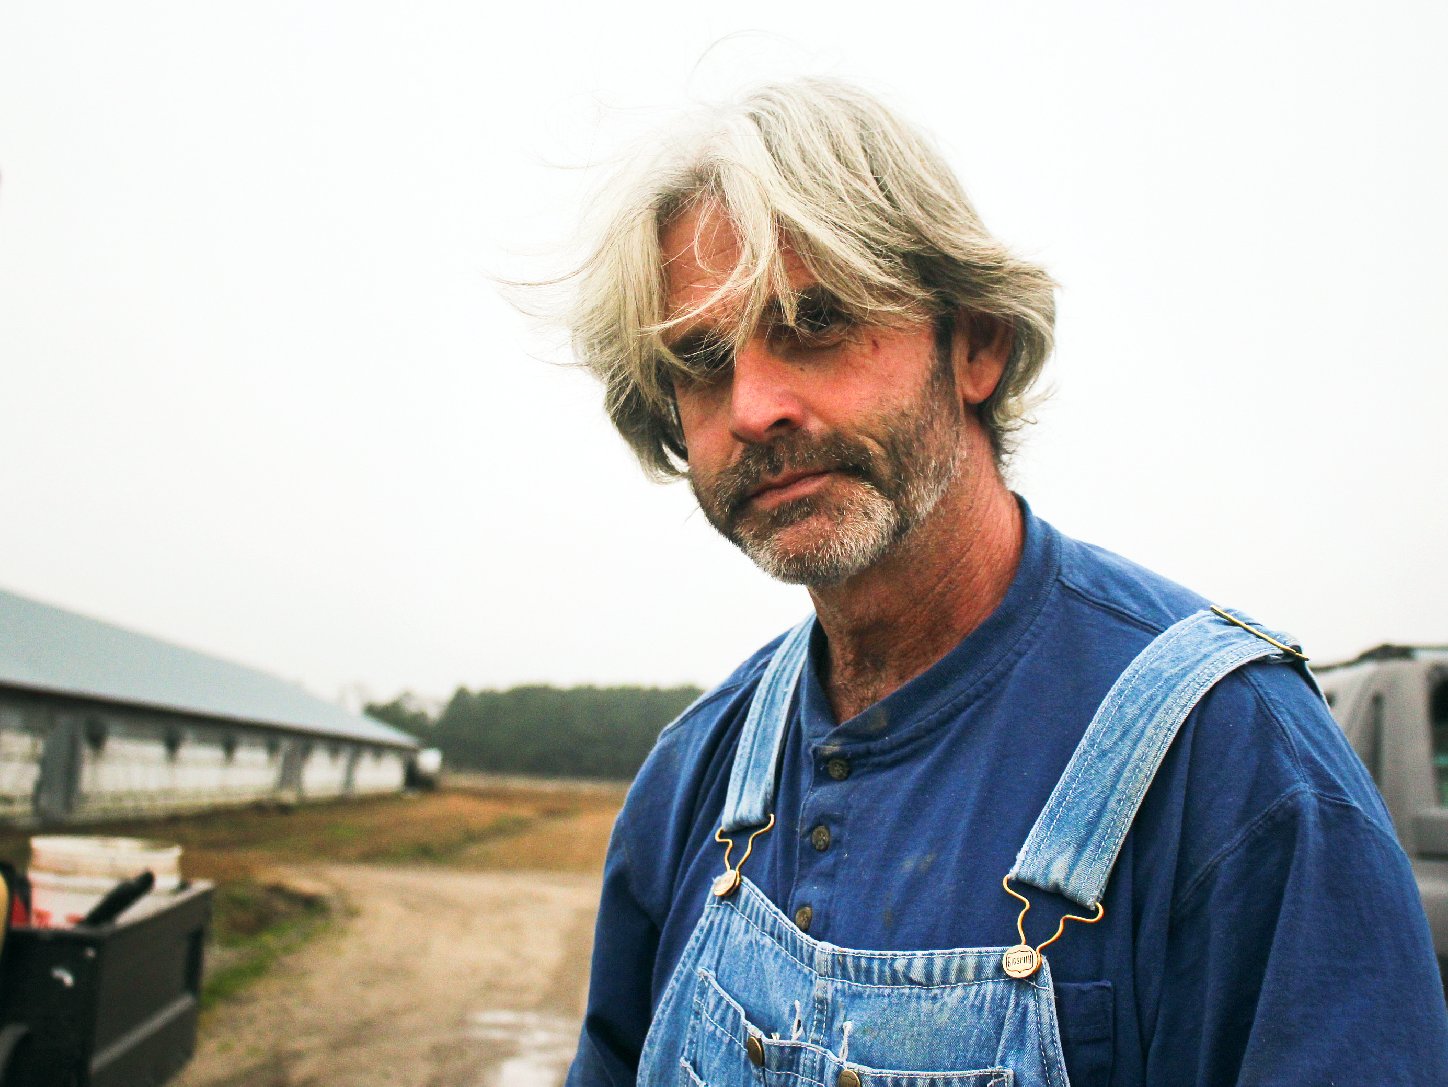 Craig Watts produces chickens for Perdue on his farm in Fairmont, N.C. Photo: Dan Charles/NPR